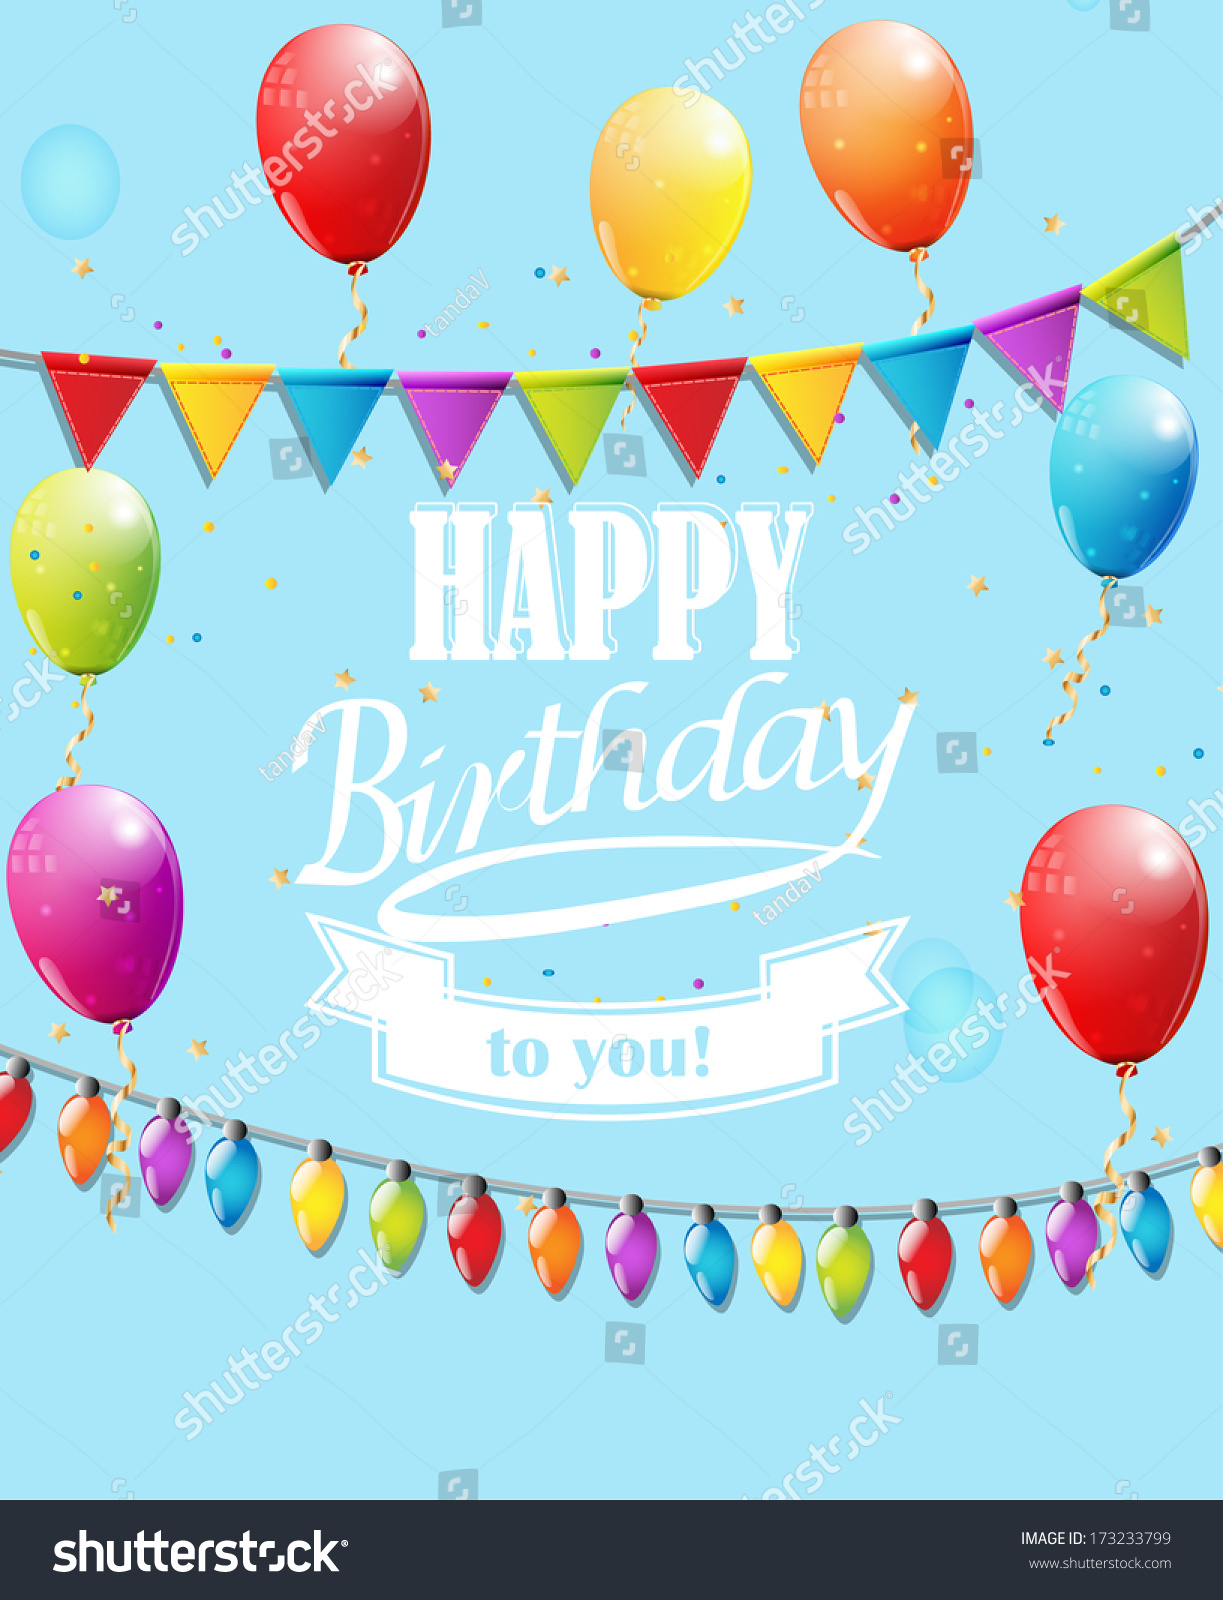 Template Happy Birthday Card Vector Stock Vector (Royalty Free) 173233799